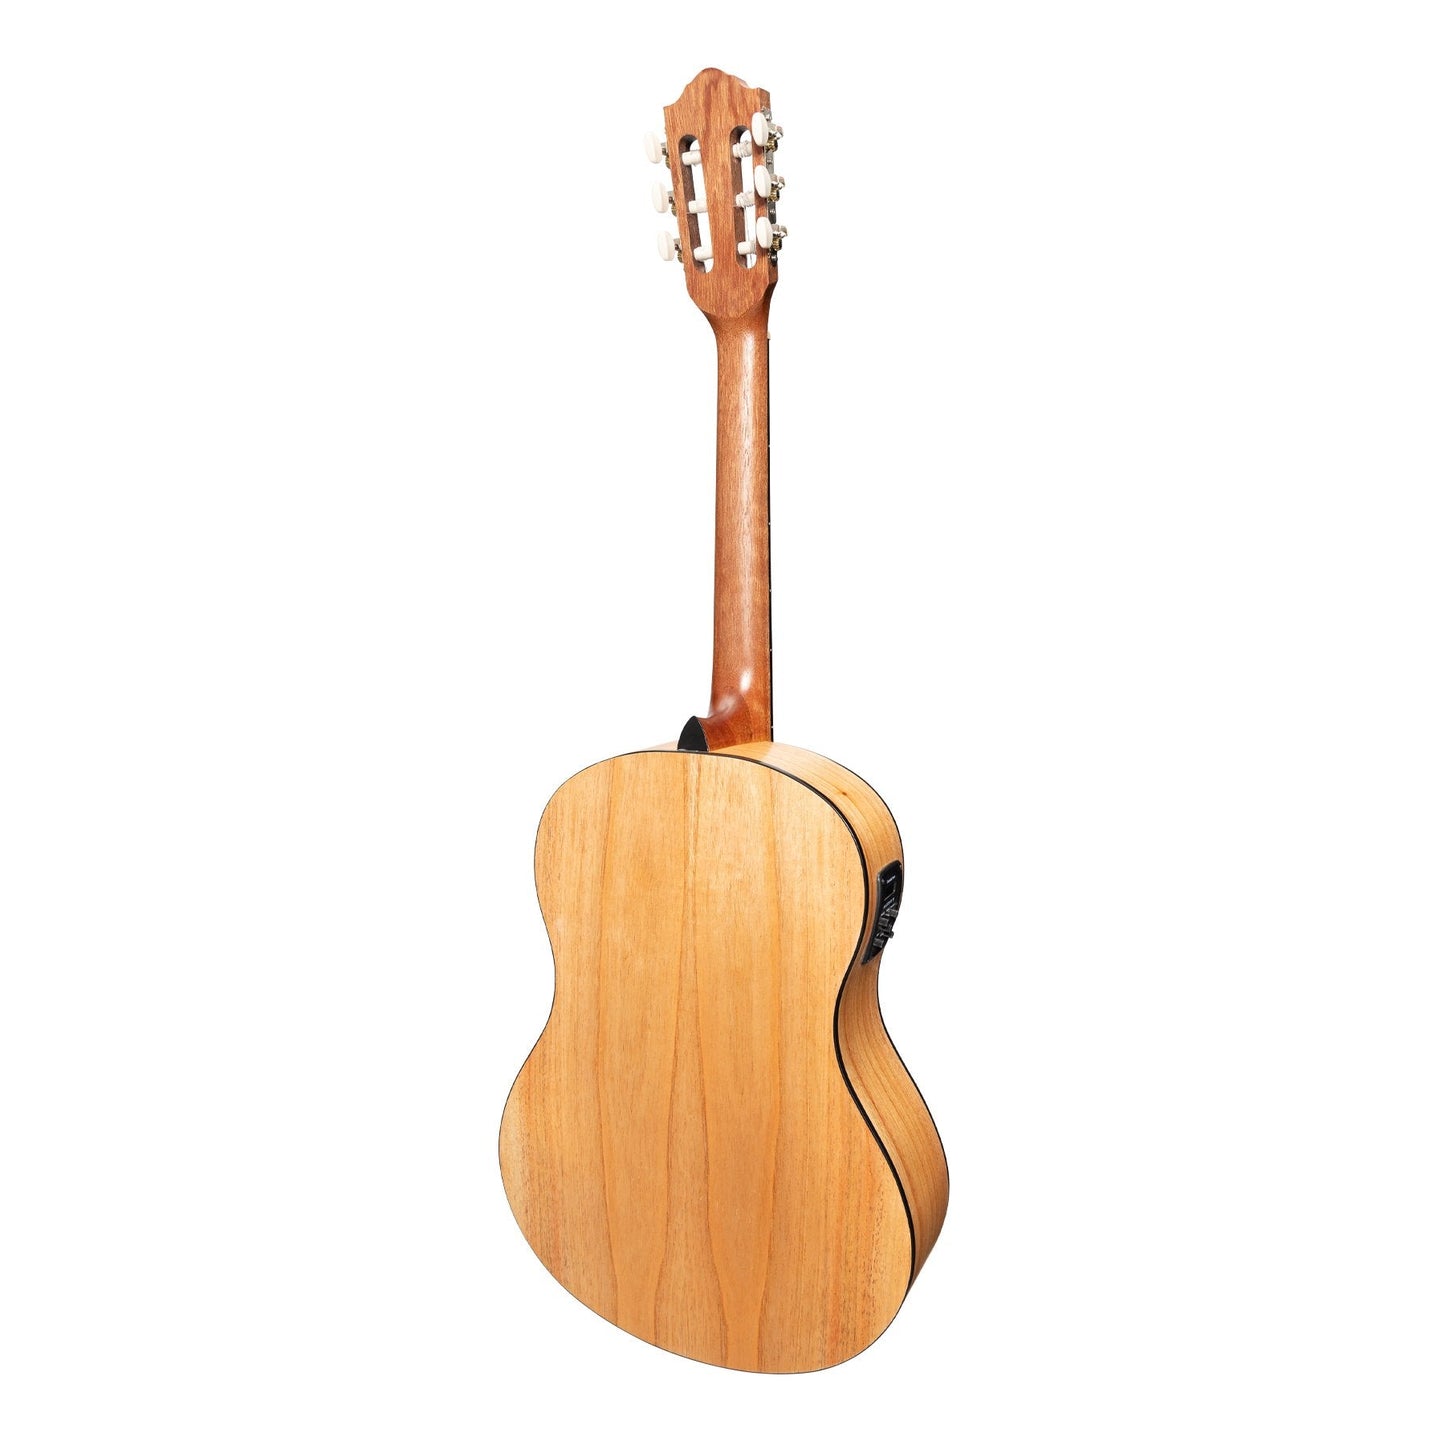 Martinez 'Slim Jim' Full Size Electric Classical Guitar with Pickup/Tuner (Mindi-Wood)